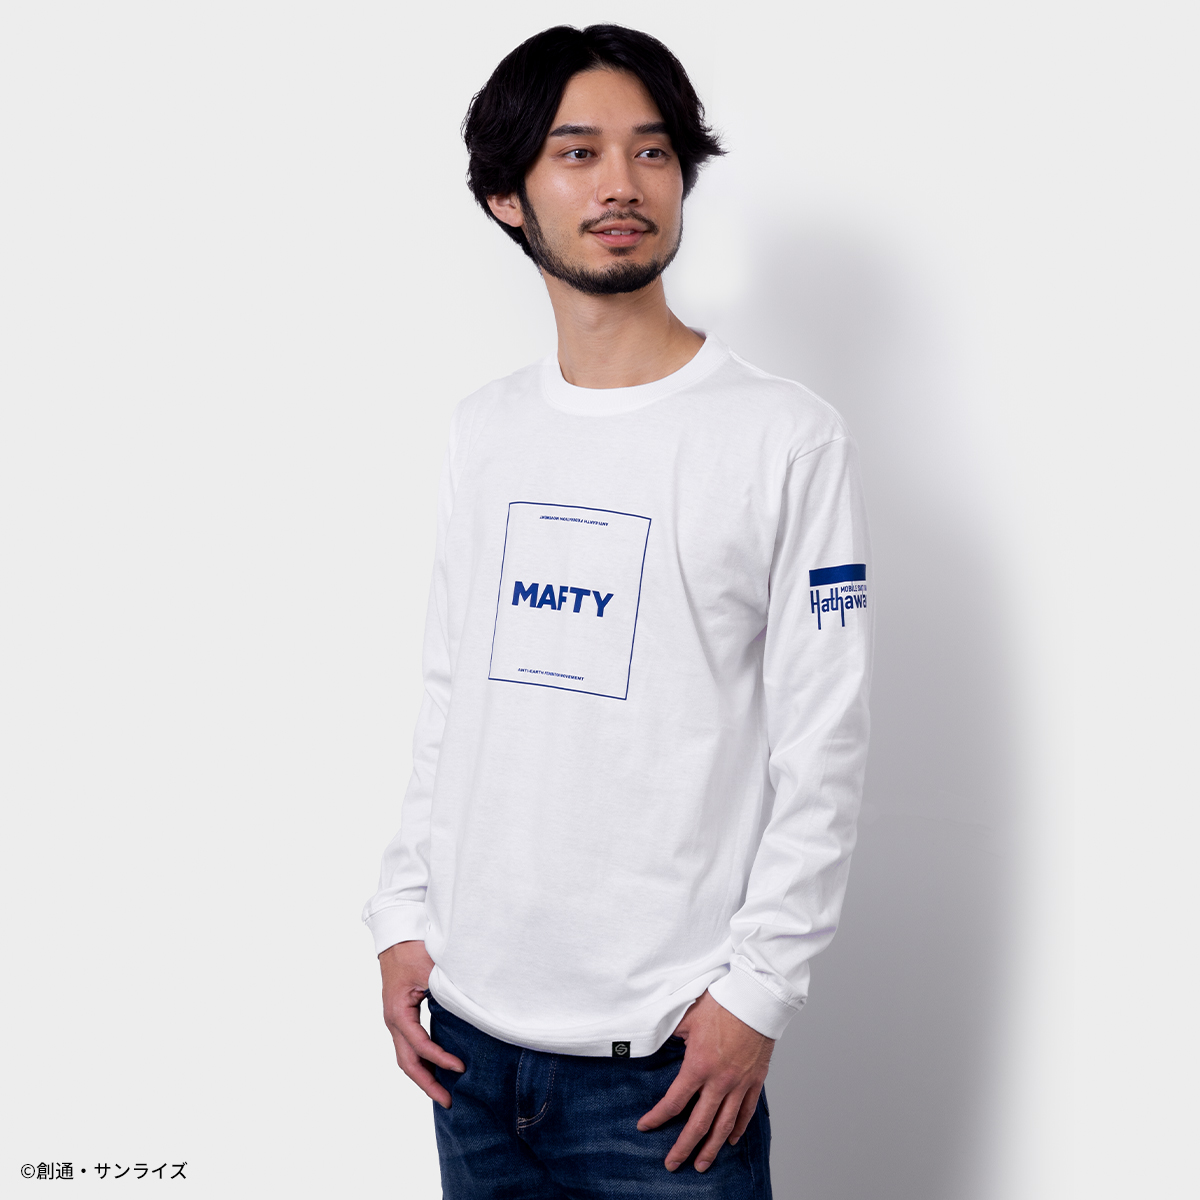 Strict-G "Mobile Suit Gundam Flash Hathaway" long-sleeve T-shirt muffy box type 2